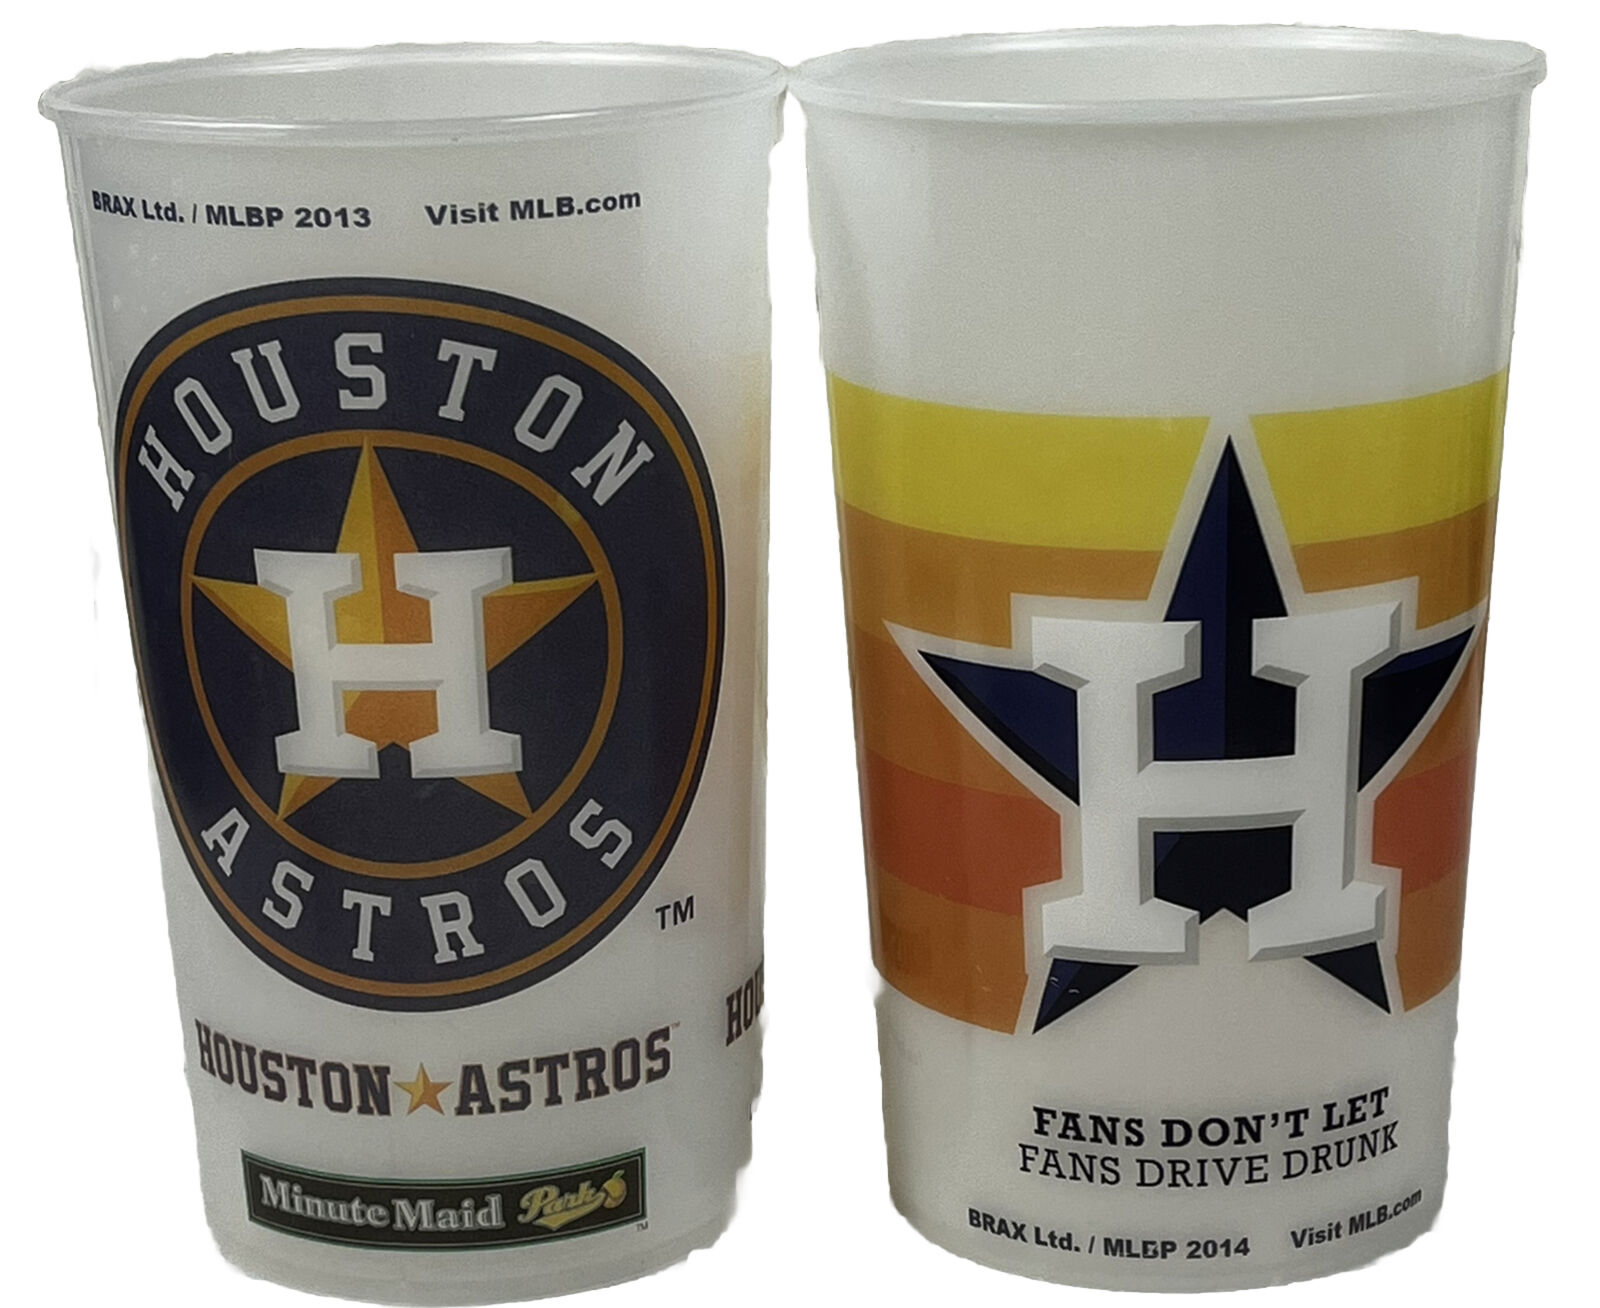 New Houston Astros logo leaked 